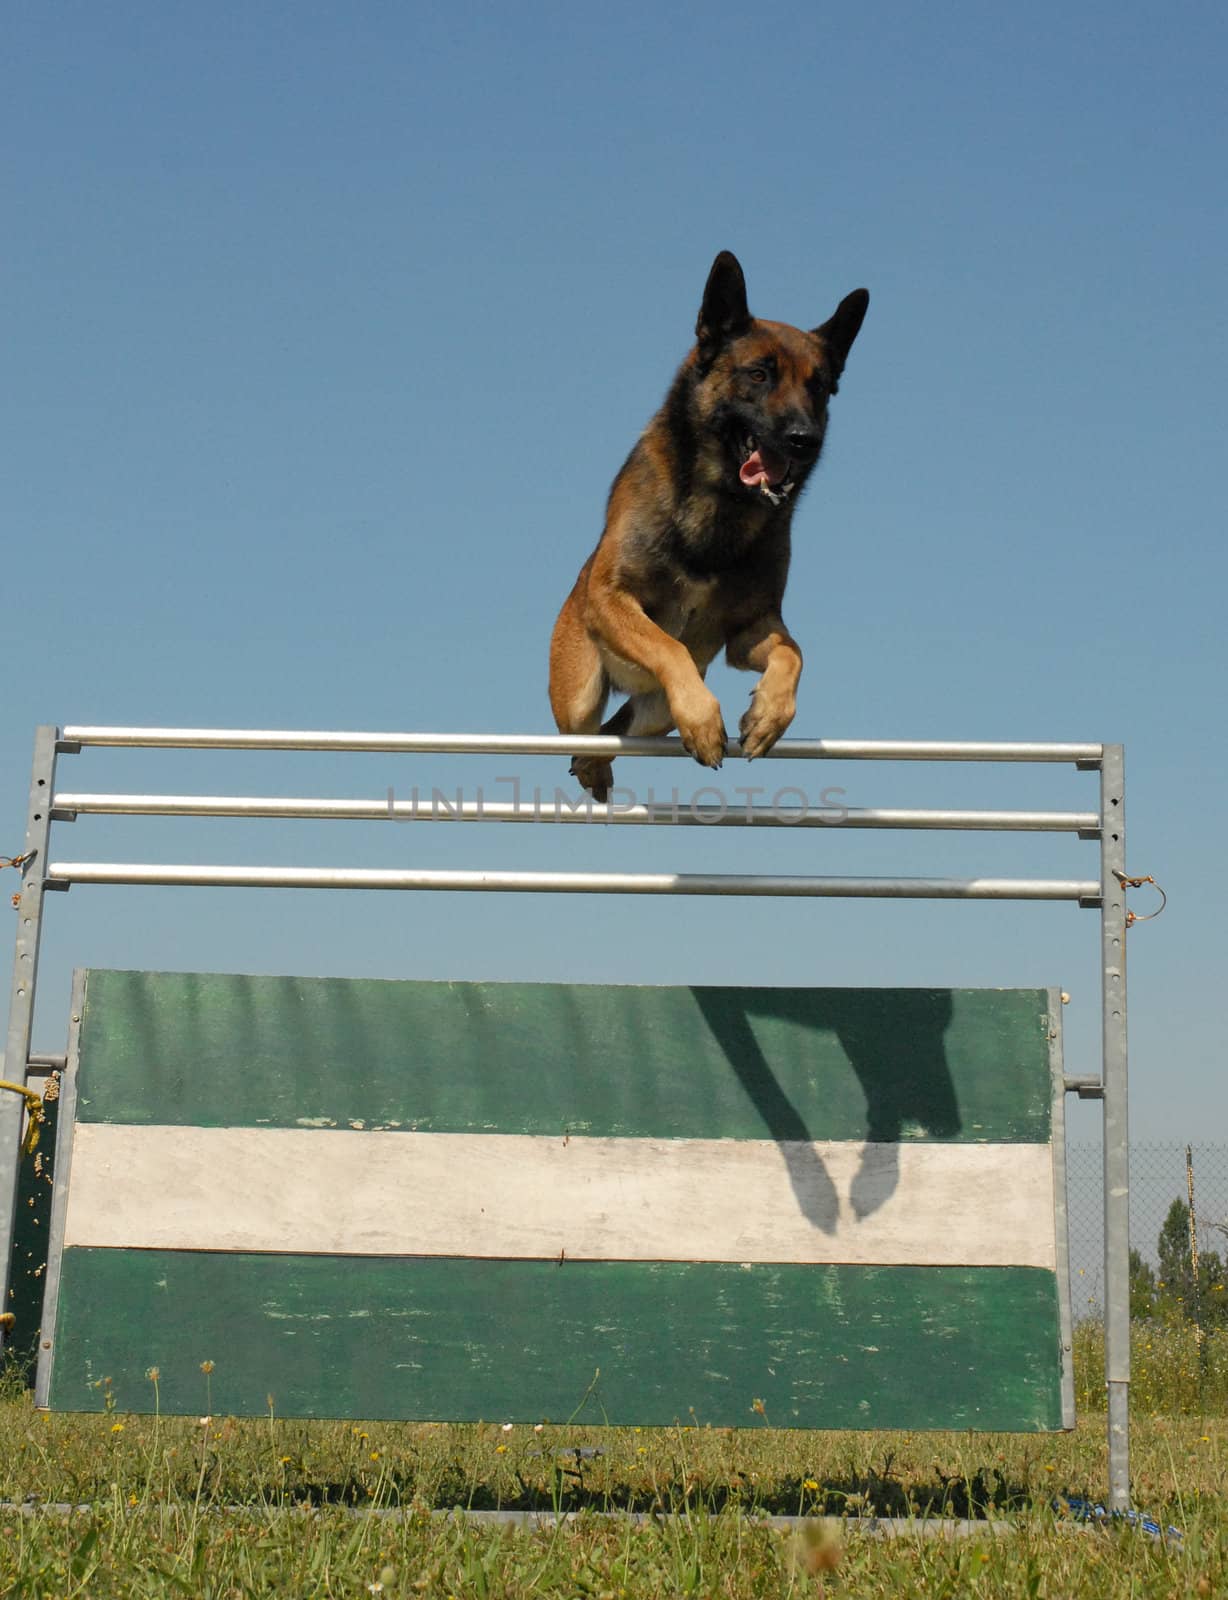 portrait of a purebred belgian sheepdog malinois jumping